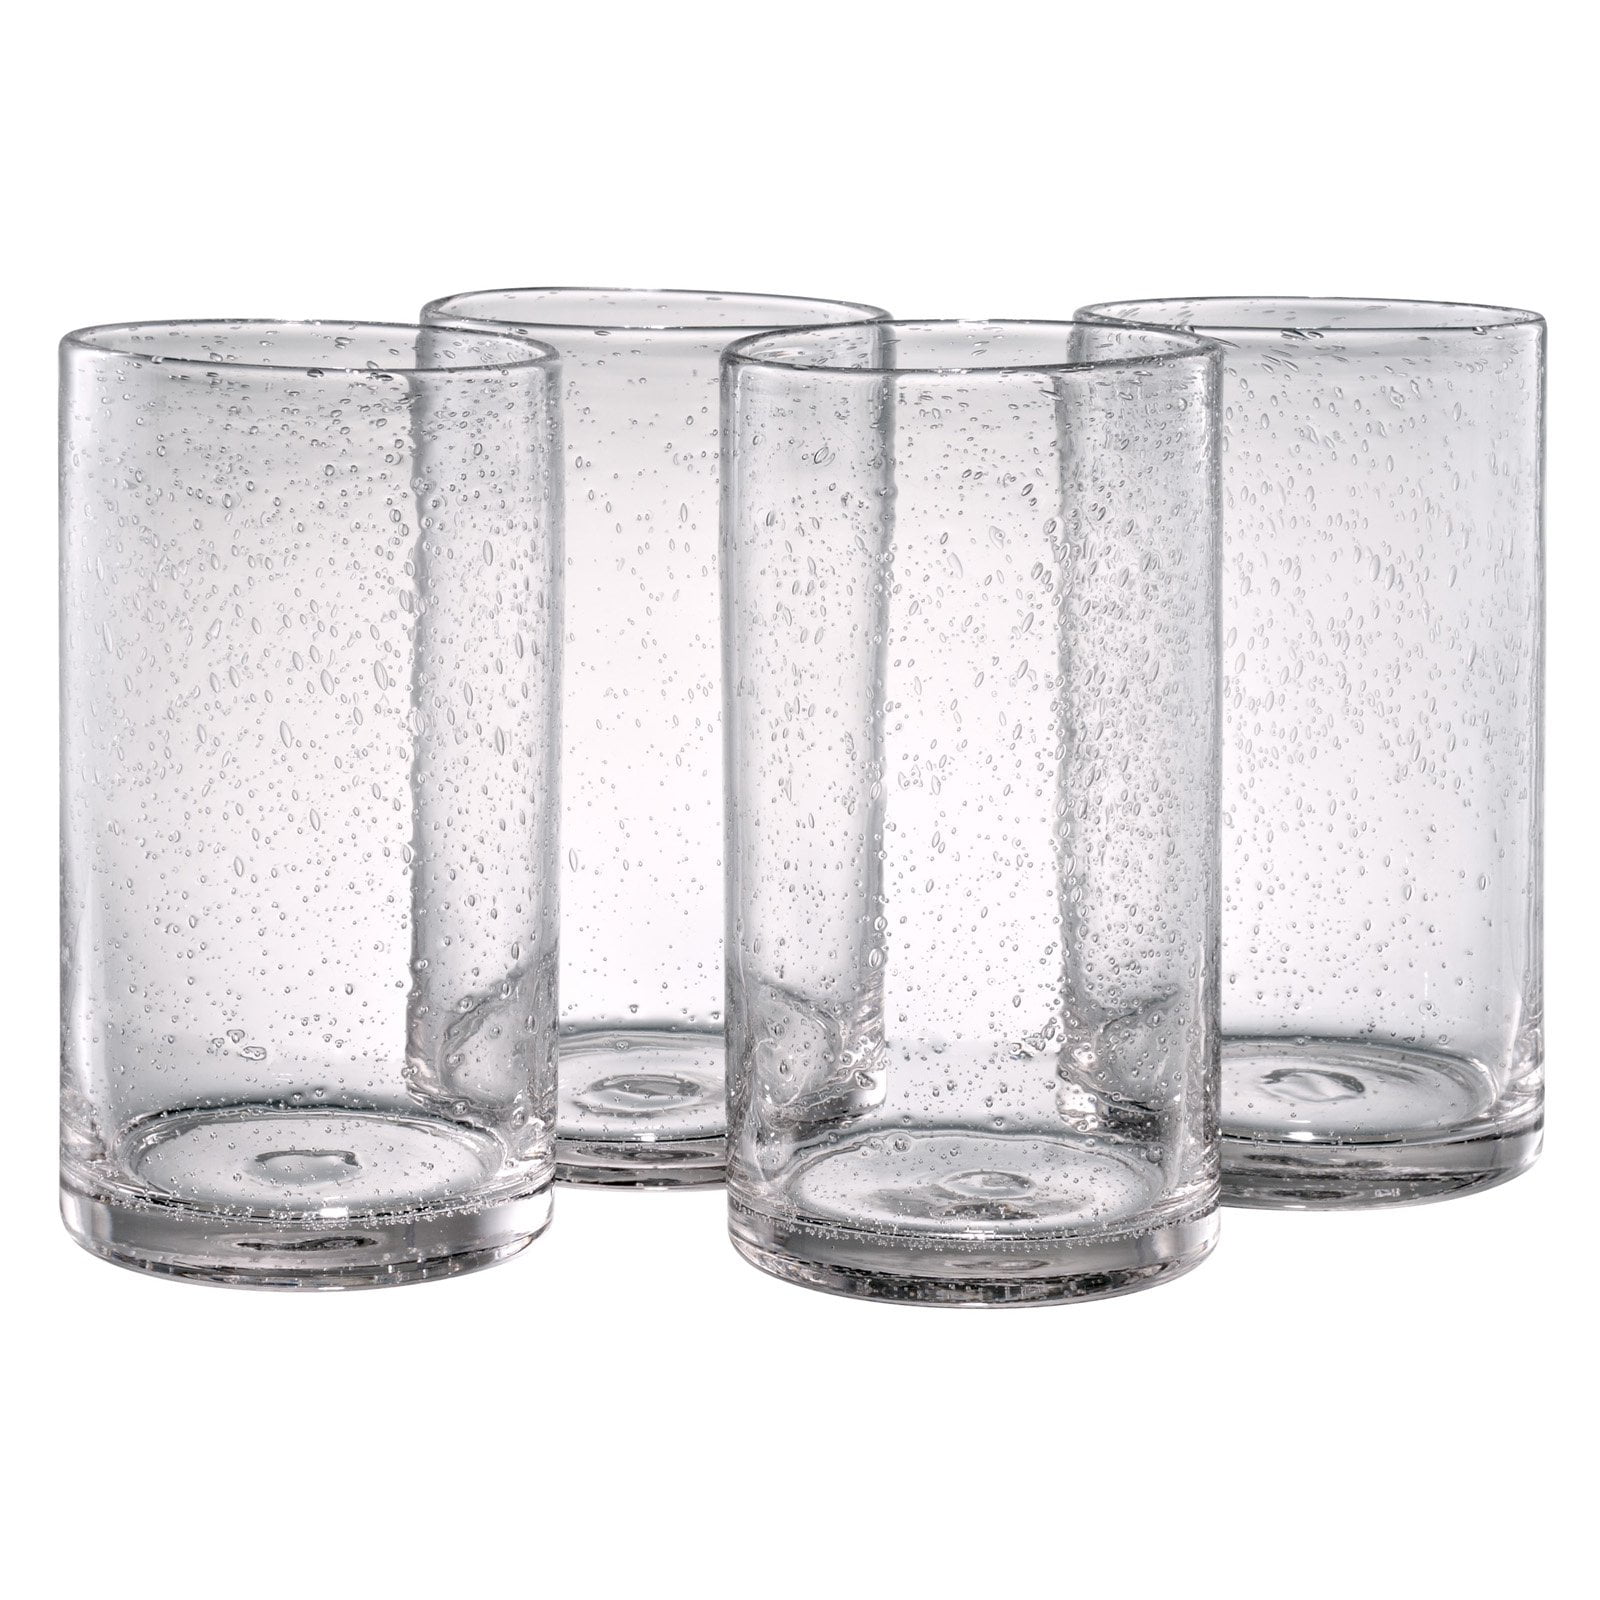 Artland 20 oz. Highball Glasses (Set of 4) 10602B - The Home Depot